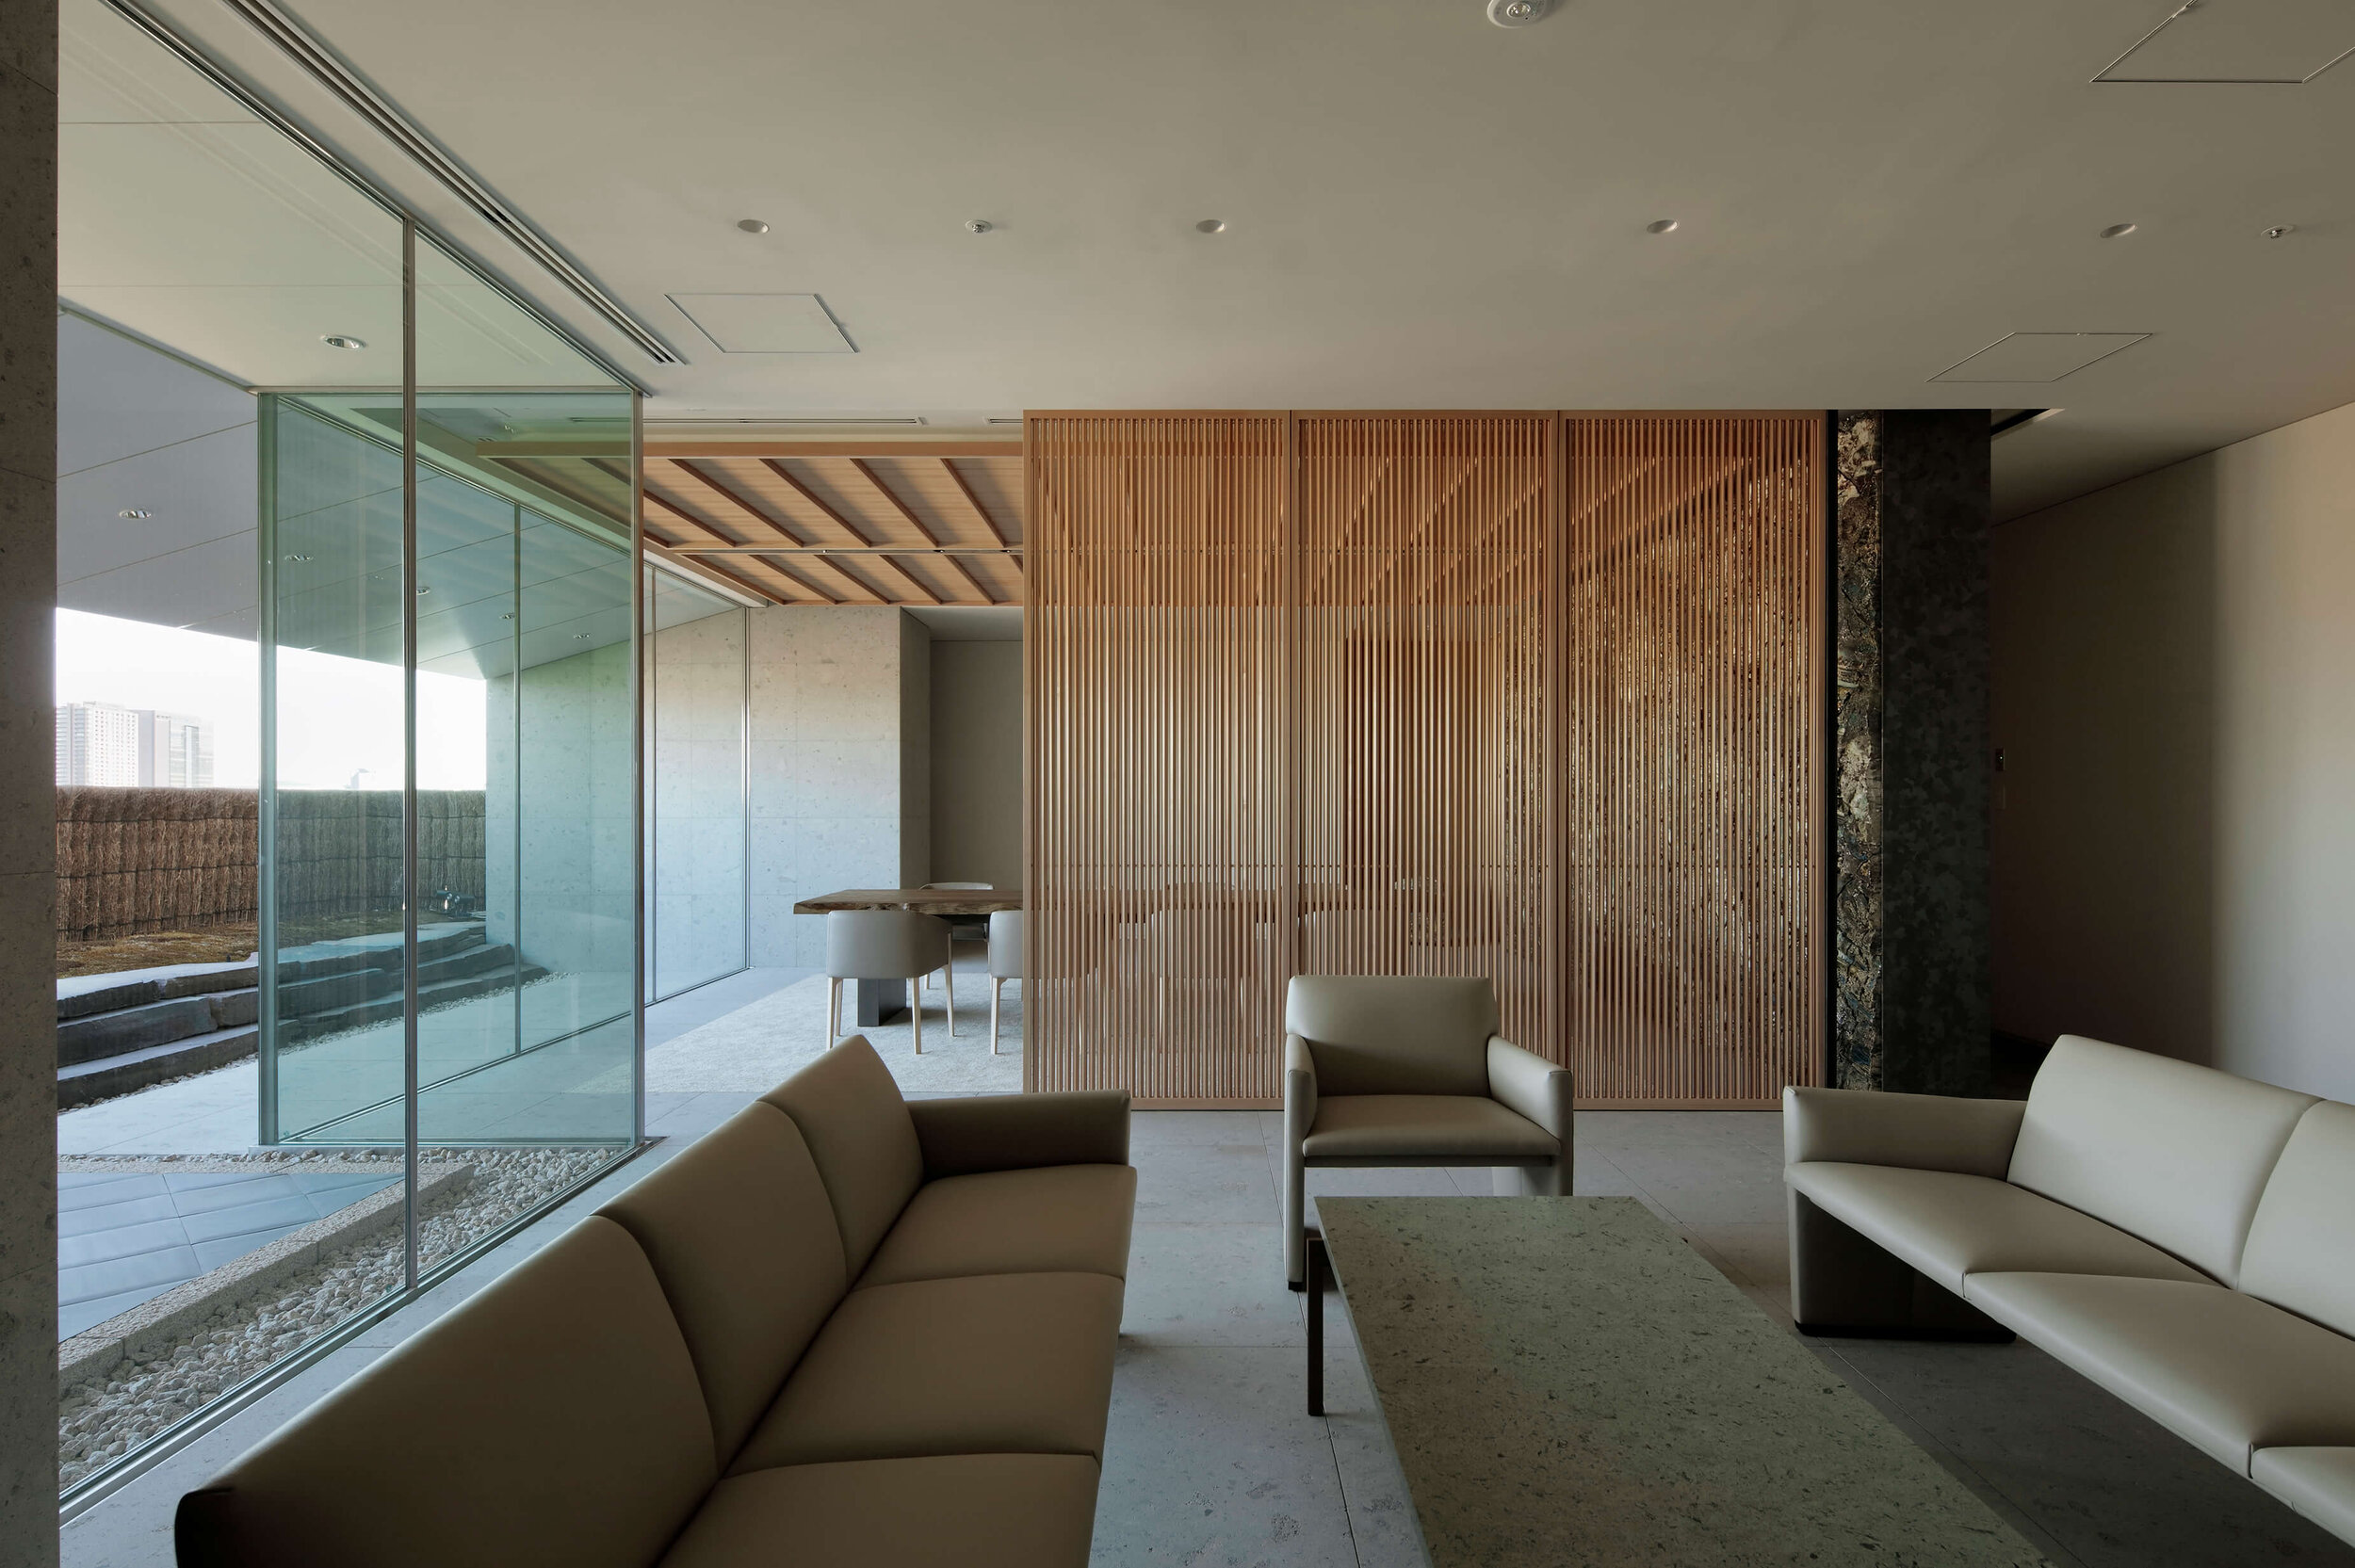 sakakida-tomoyuki-architect-ntv-office-interior-design-tokyo-japan-idreit-004m.jpg